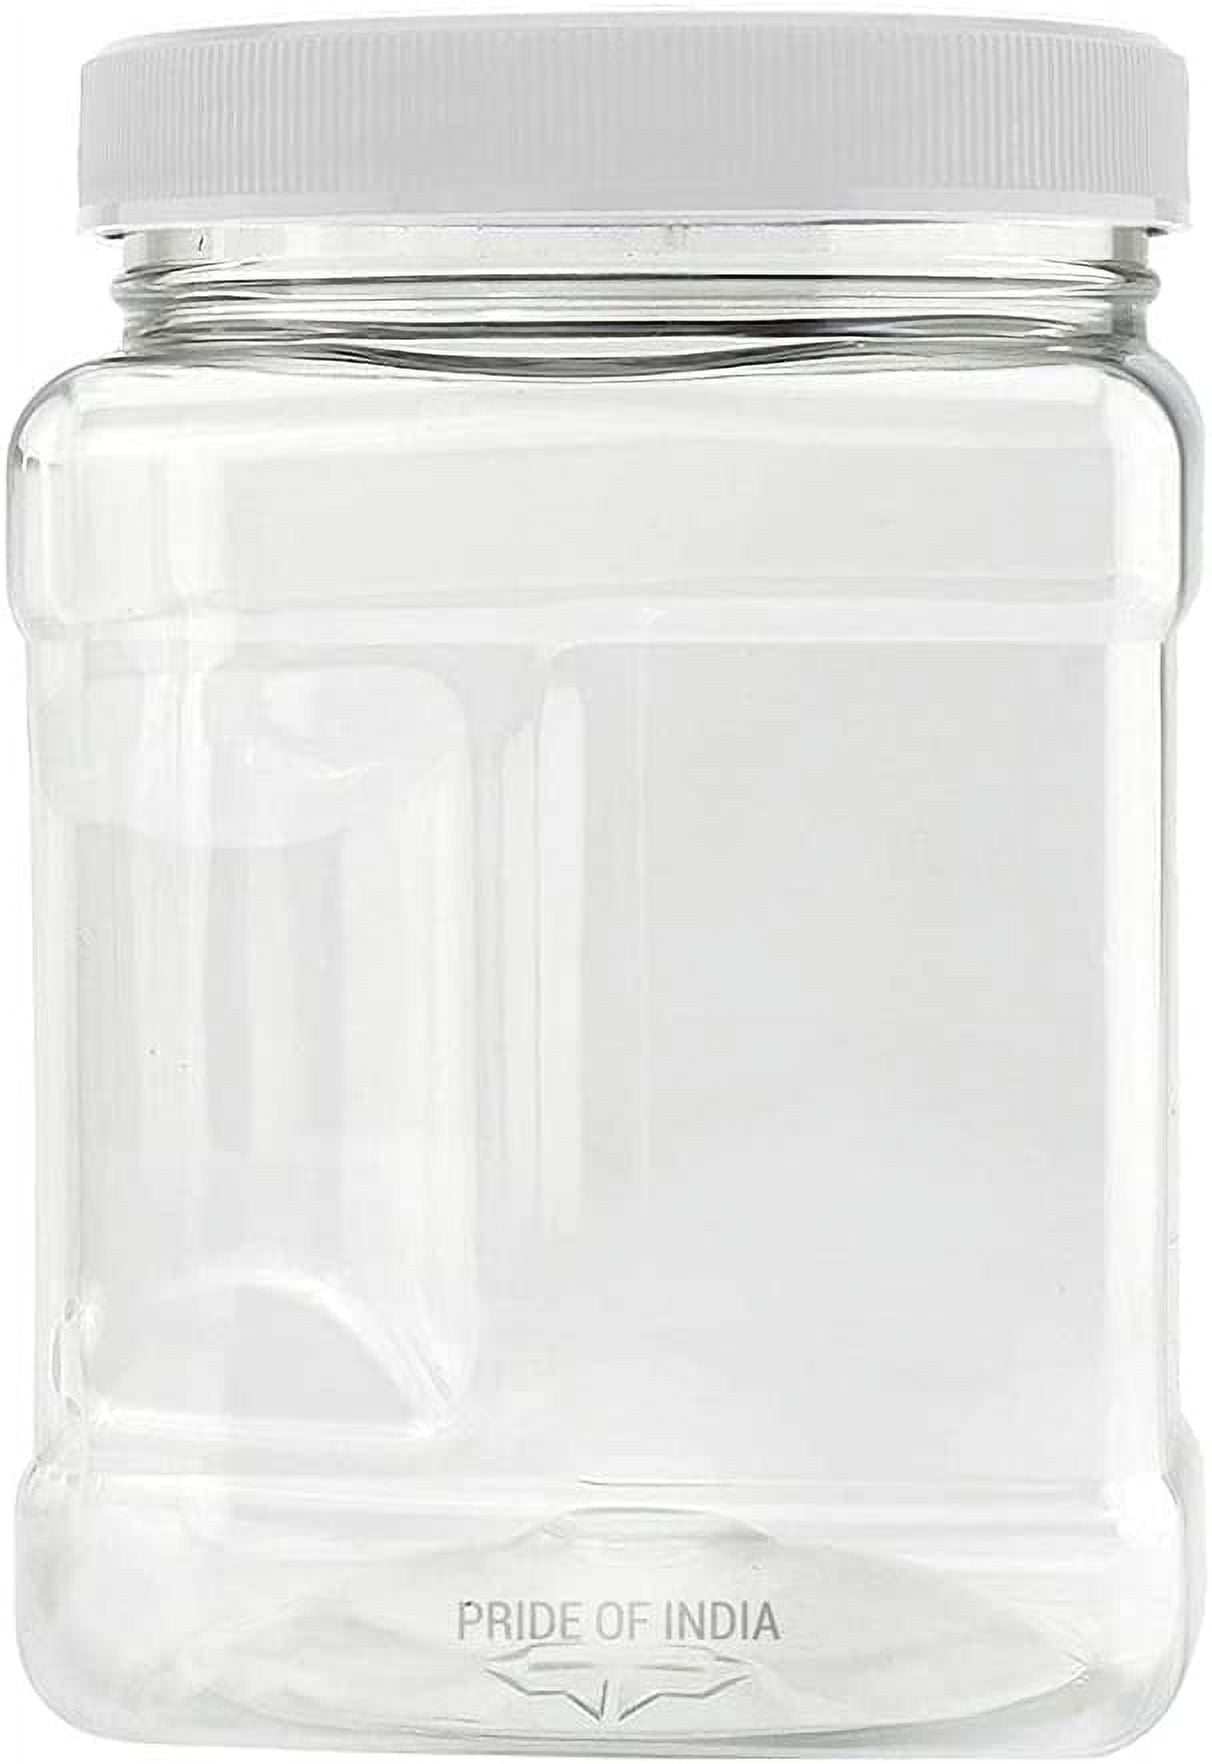 1 Gallon Plastic Grip Jars – Square PET, Clear